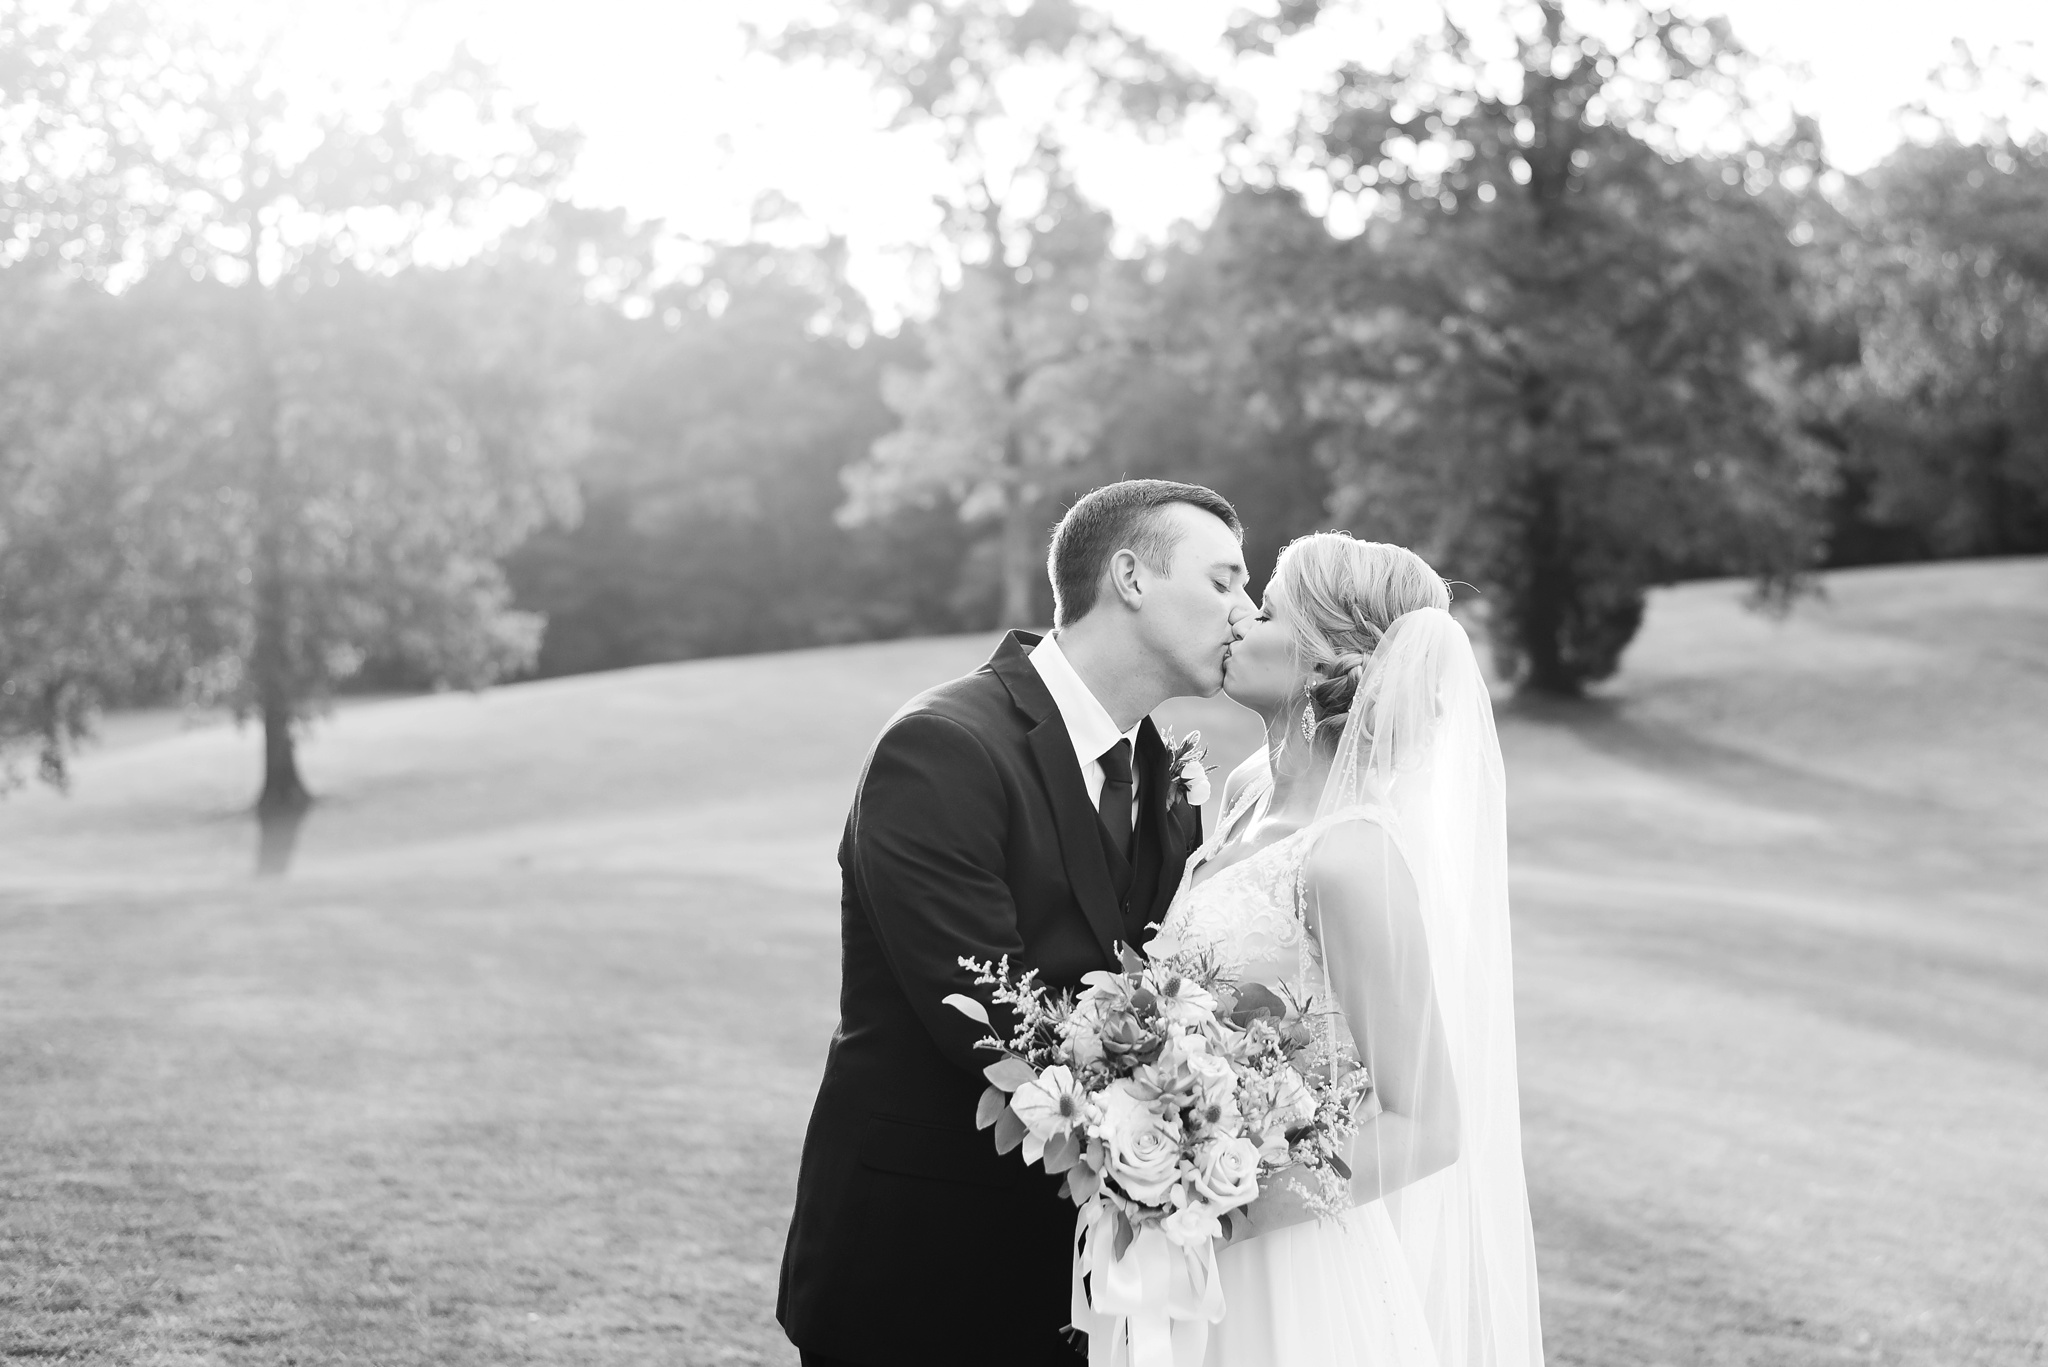 Gray and Black Classic Outdoor Wedding | Birmingham Alabama Wedding Photographers_0046.jpg